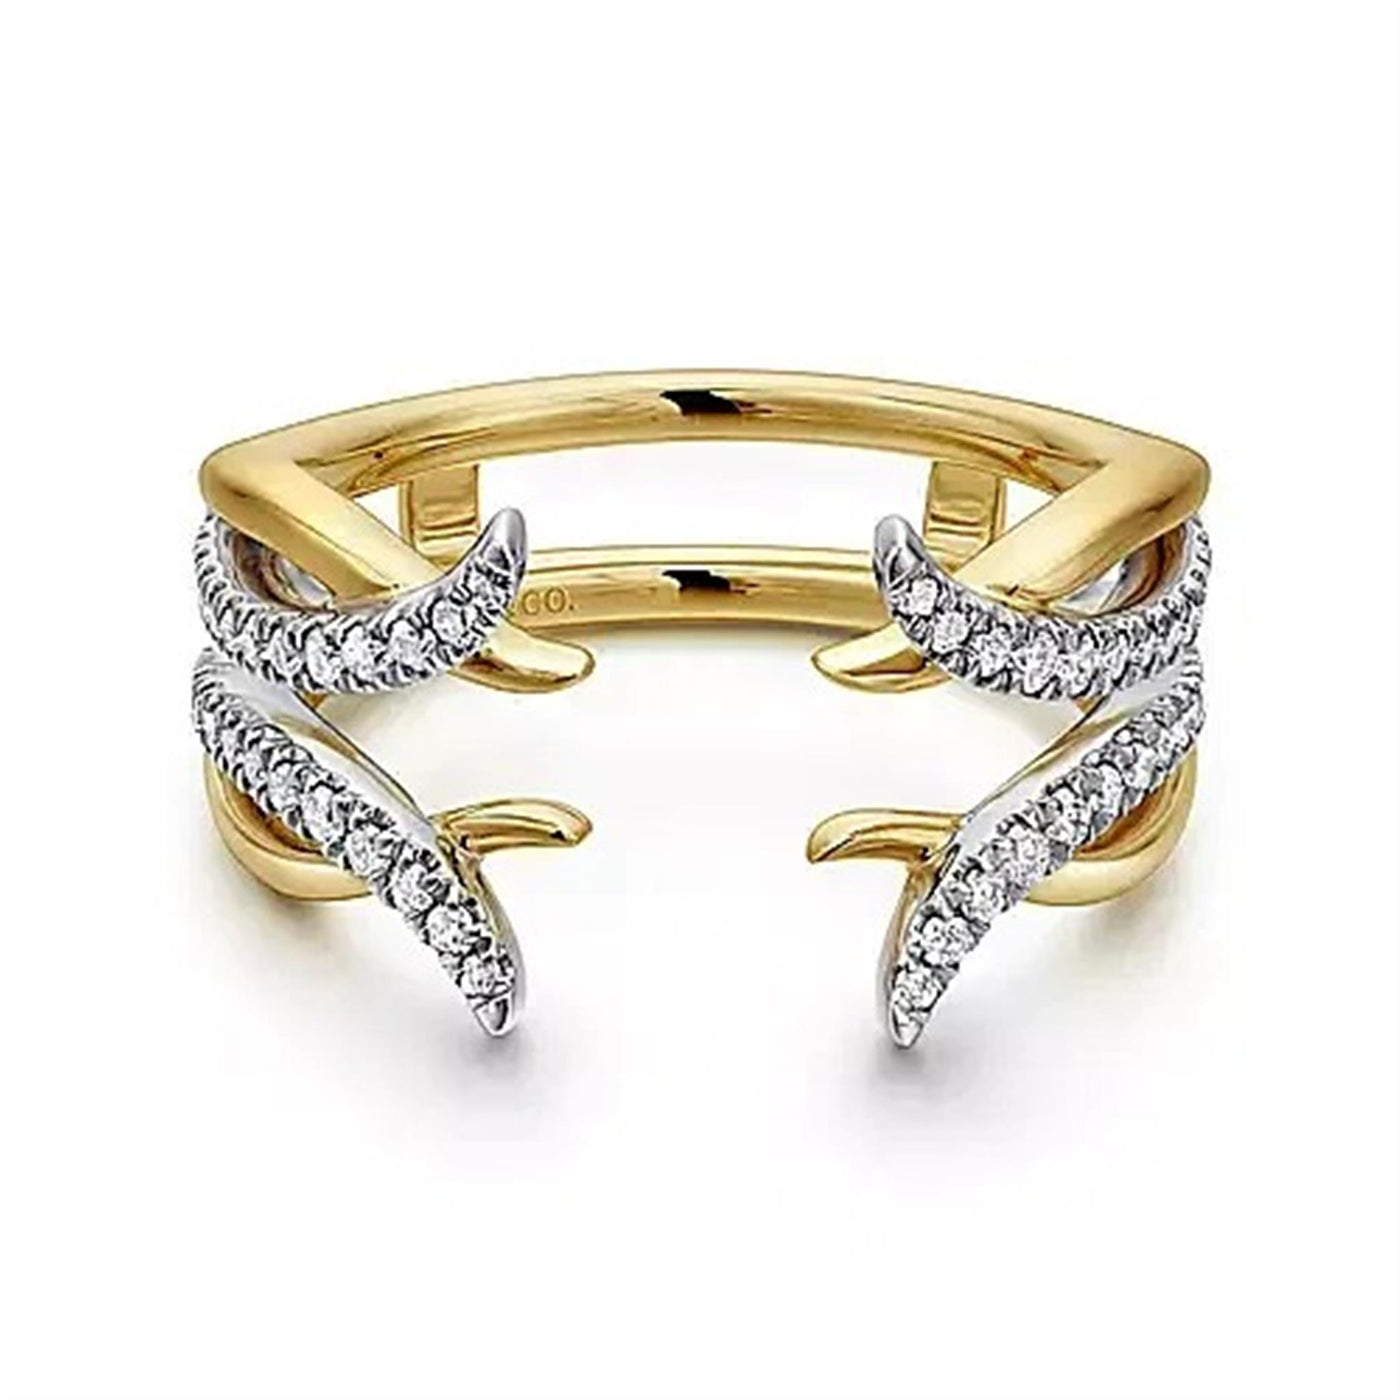 Gabriel - Contemporary Collection 14K White & Yellow Gold .30ctw Diamond Ring Enhancer